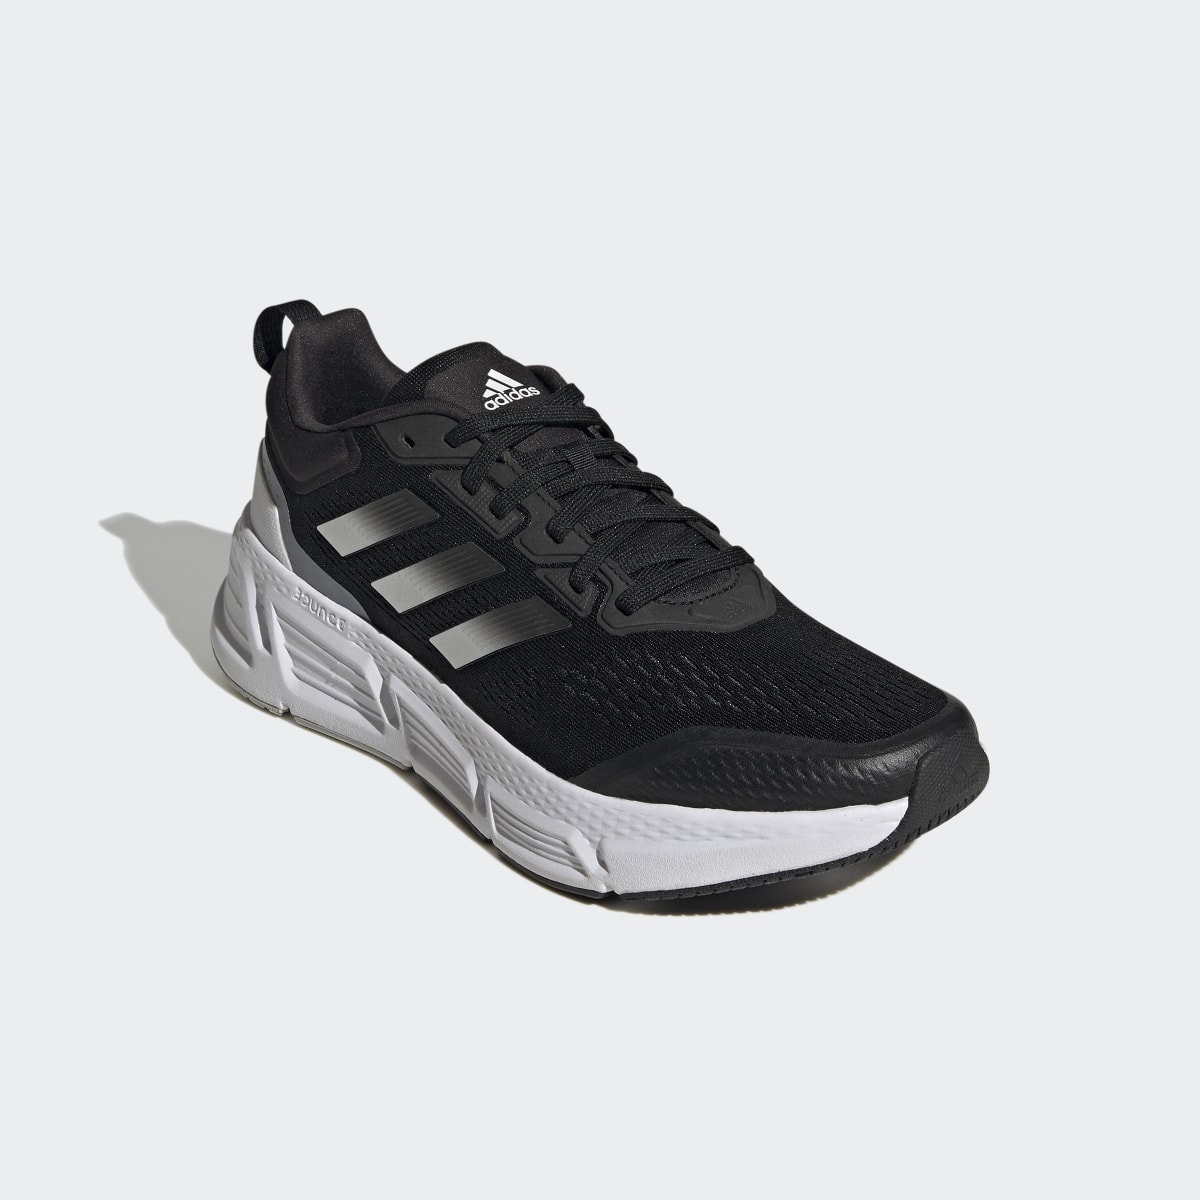 Adidas Questar Running Shoes. 5